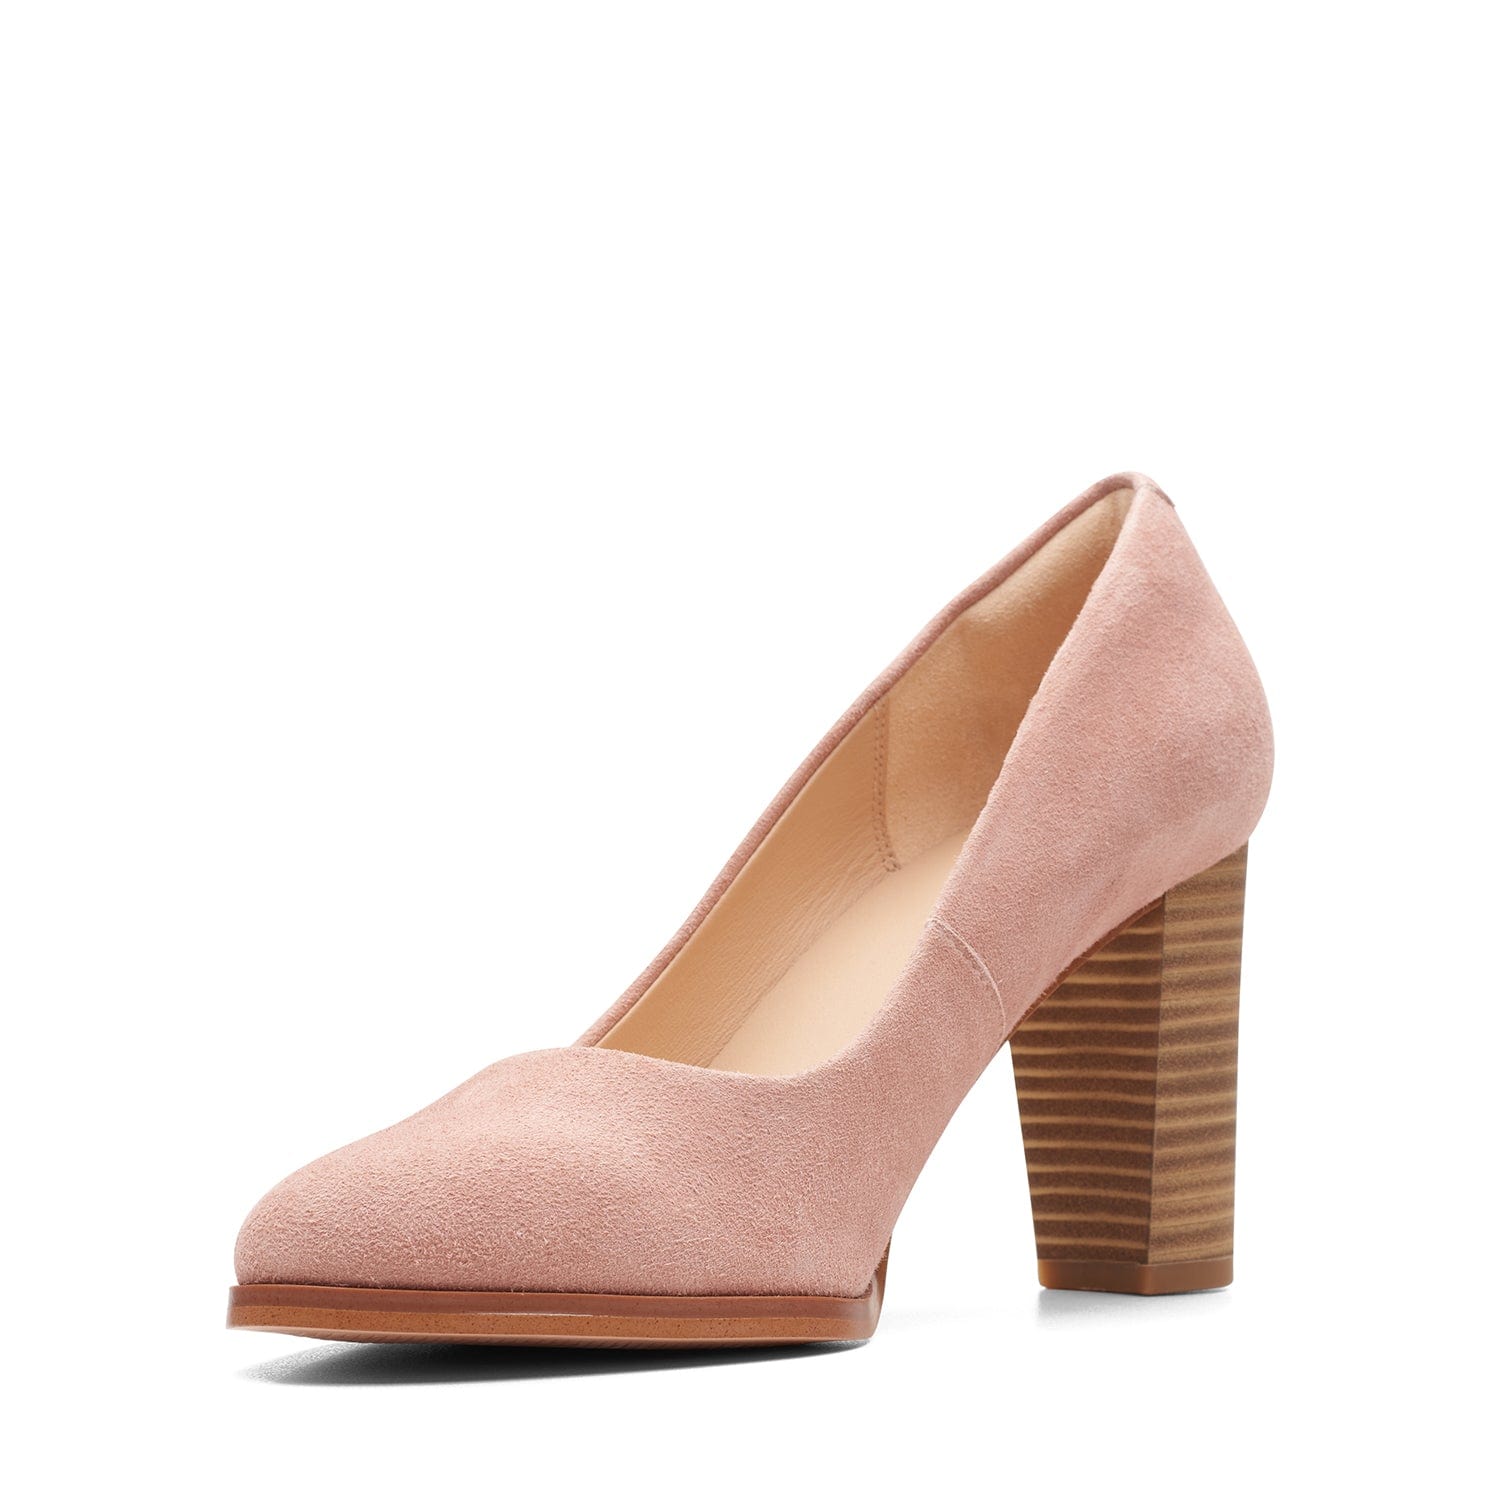 Clarks Kaylin Cara 2 - Shoes - Rose Suede - 261657844 - D Width (Standard Fit)